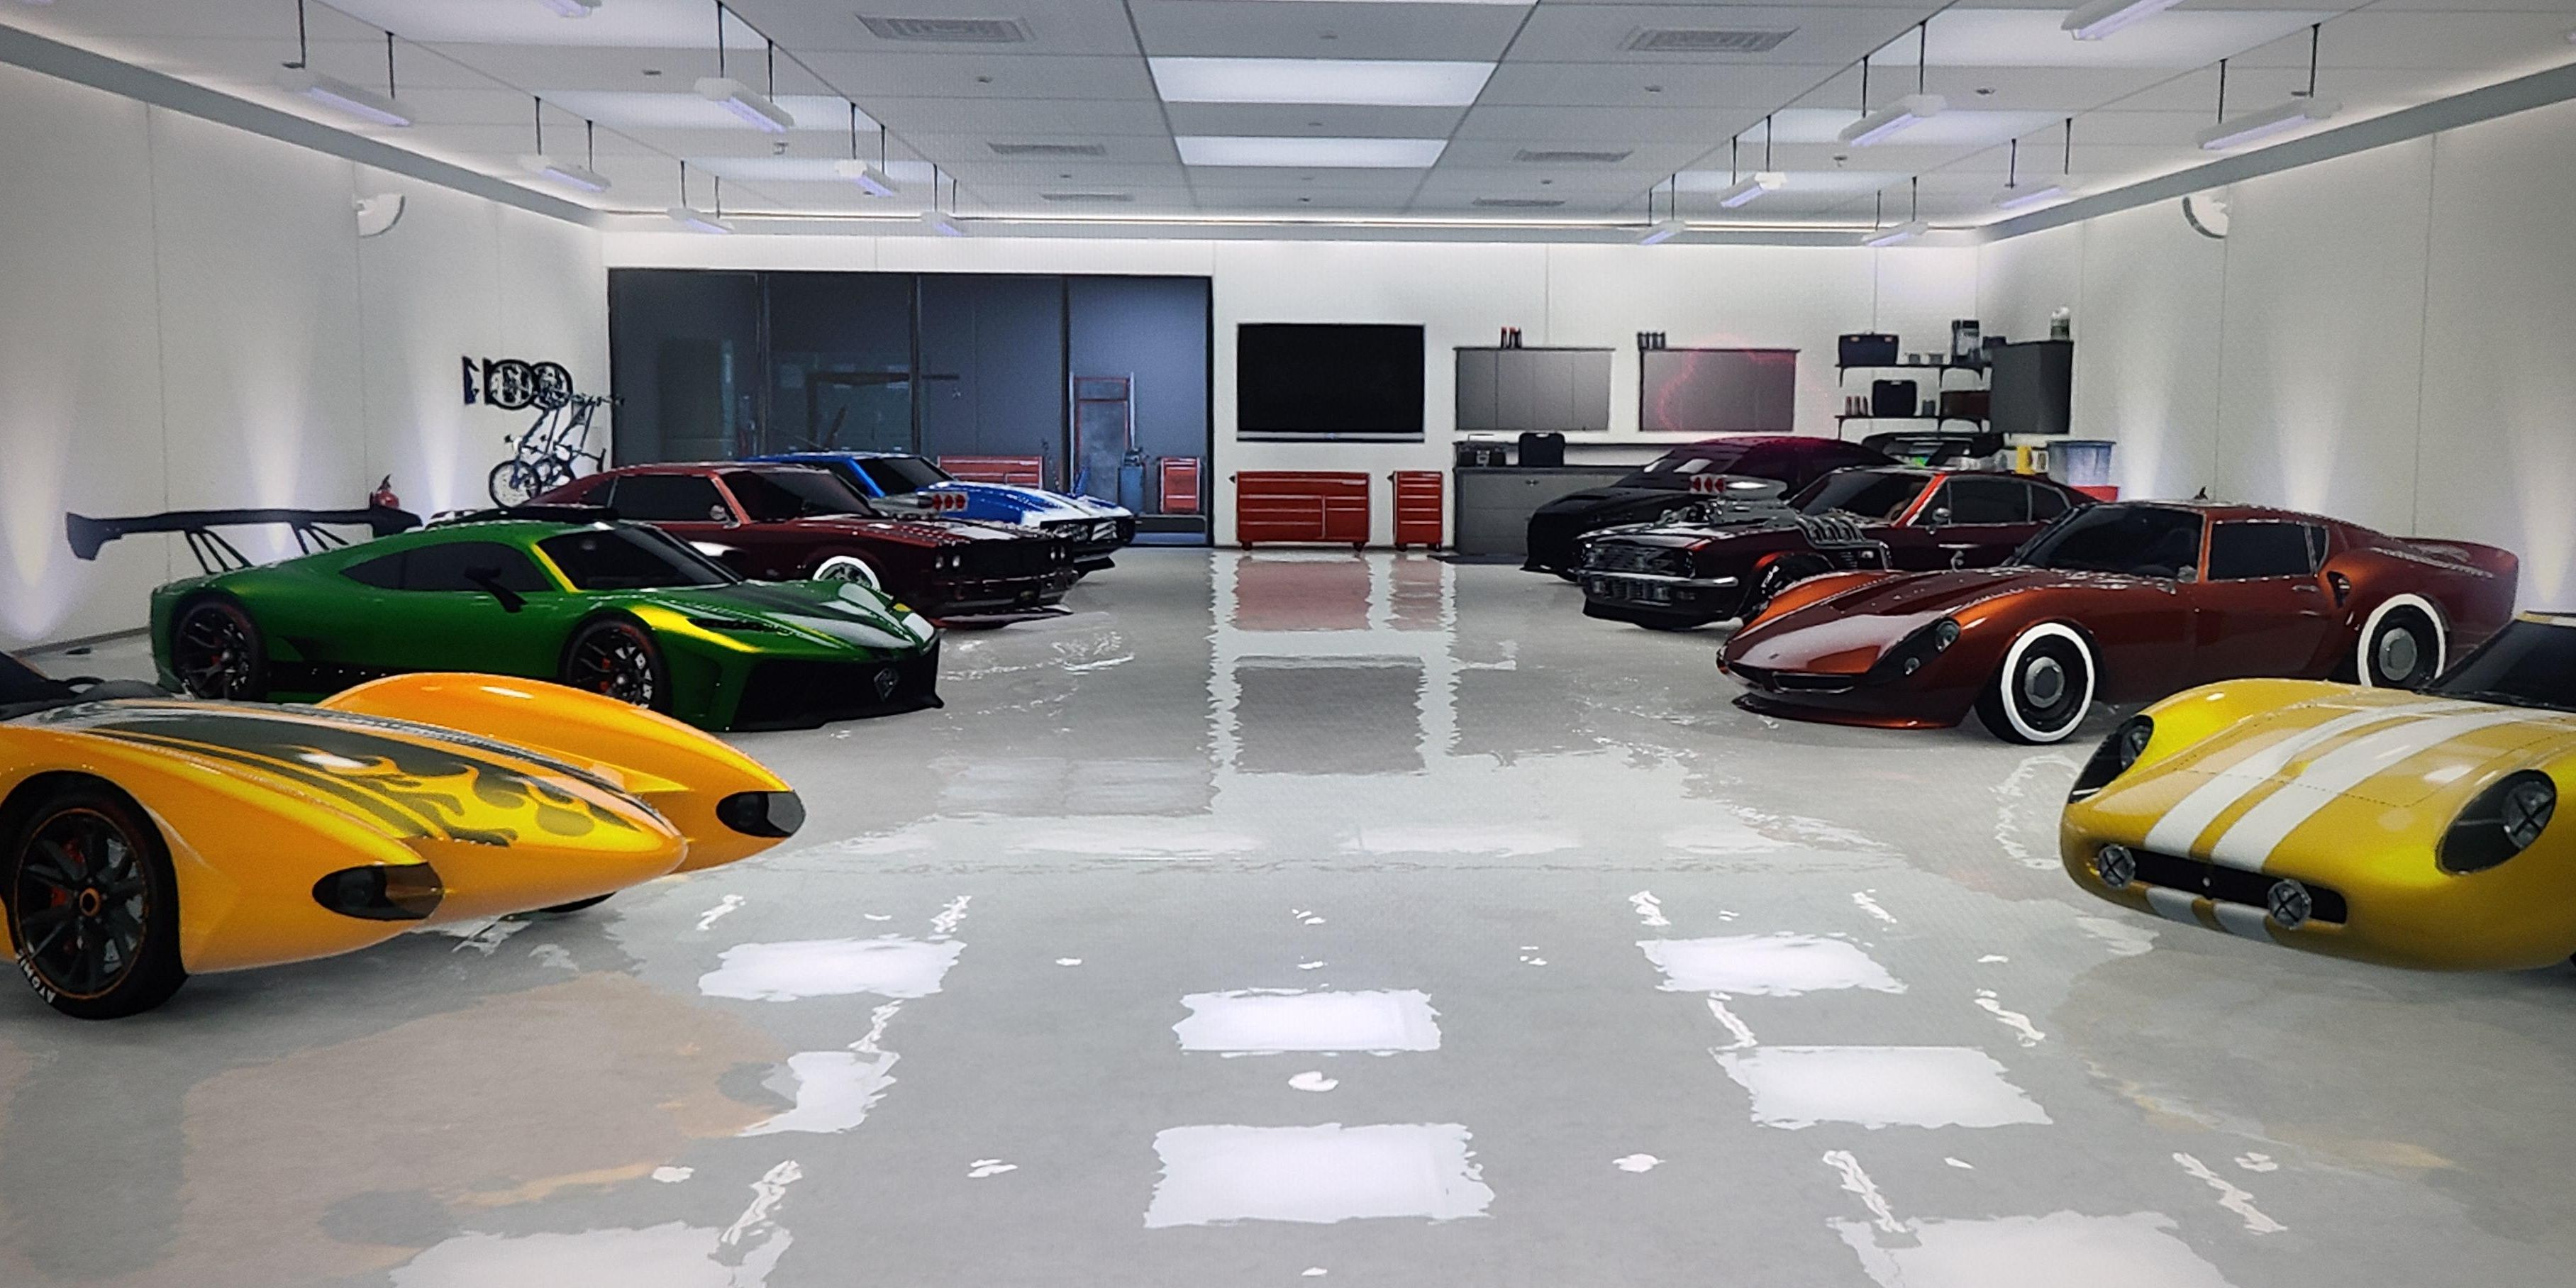 Garage dans GTA V plein de véhicules